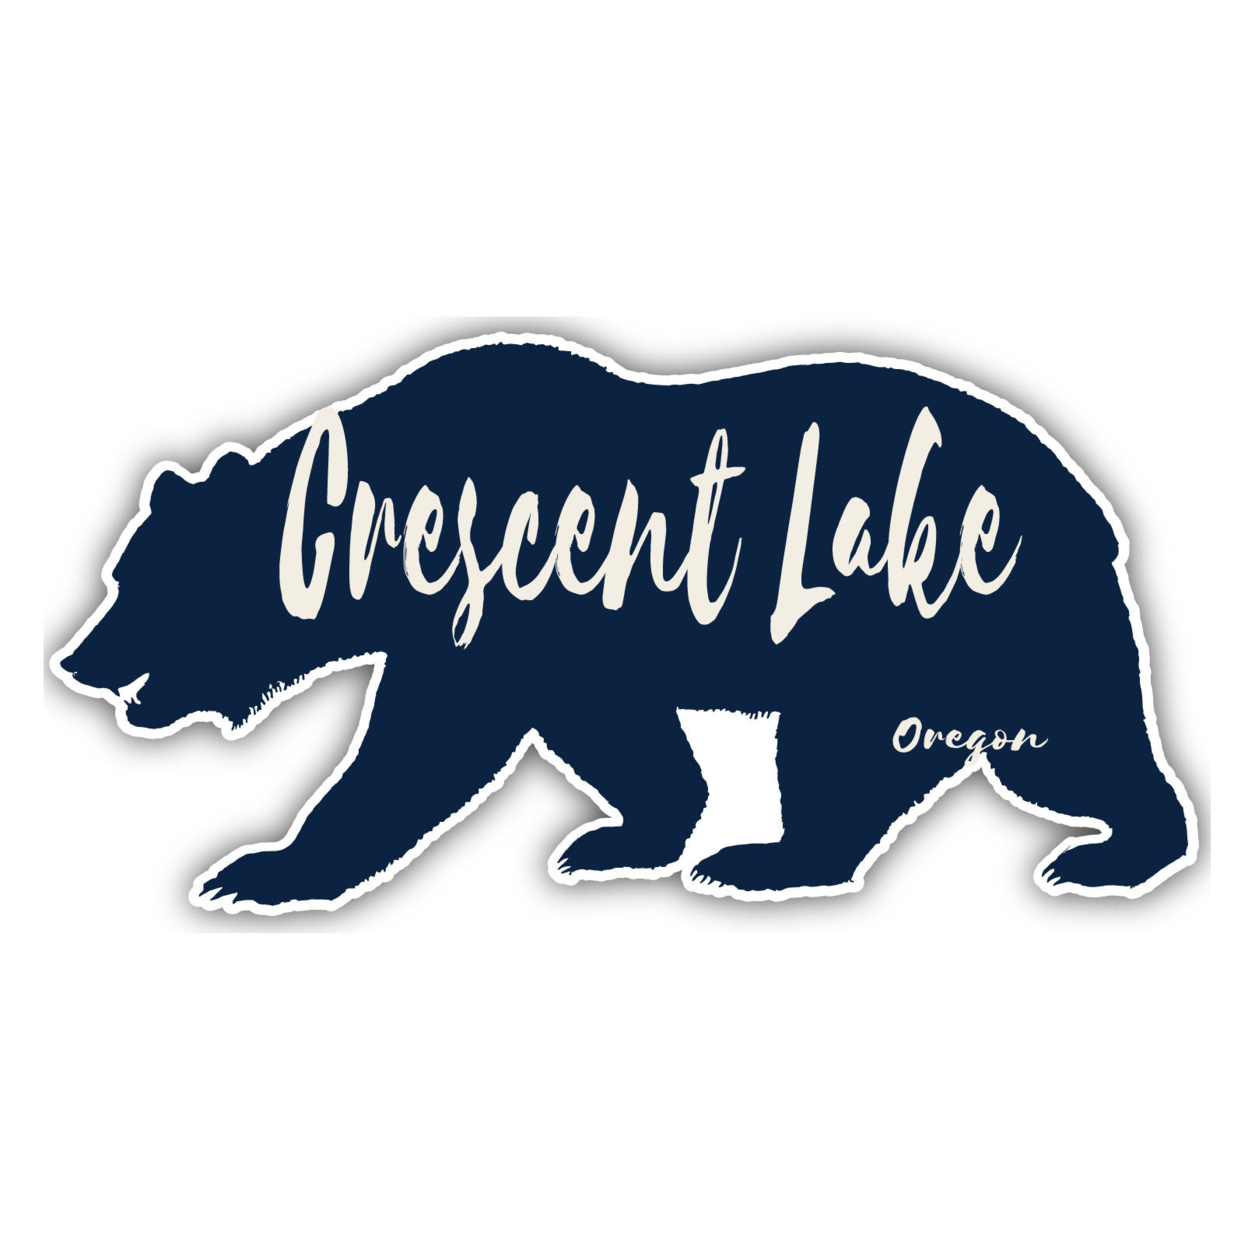 Crescent Lake Oregon Souvenir Decorative Stickers (Choose Theme And Size) - Single Unit, 4-Inch, Camp Life